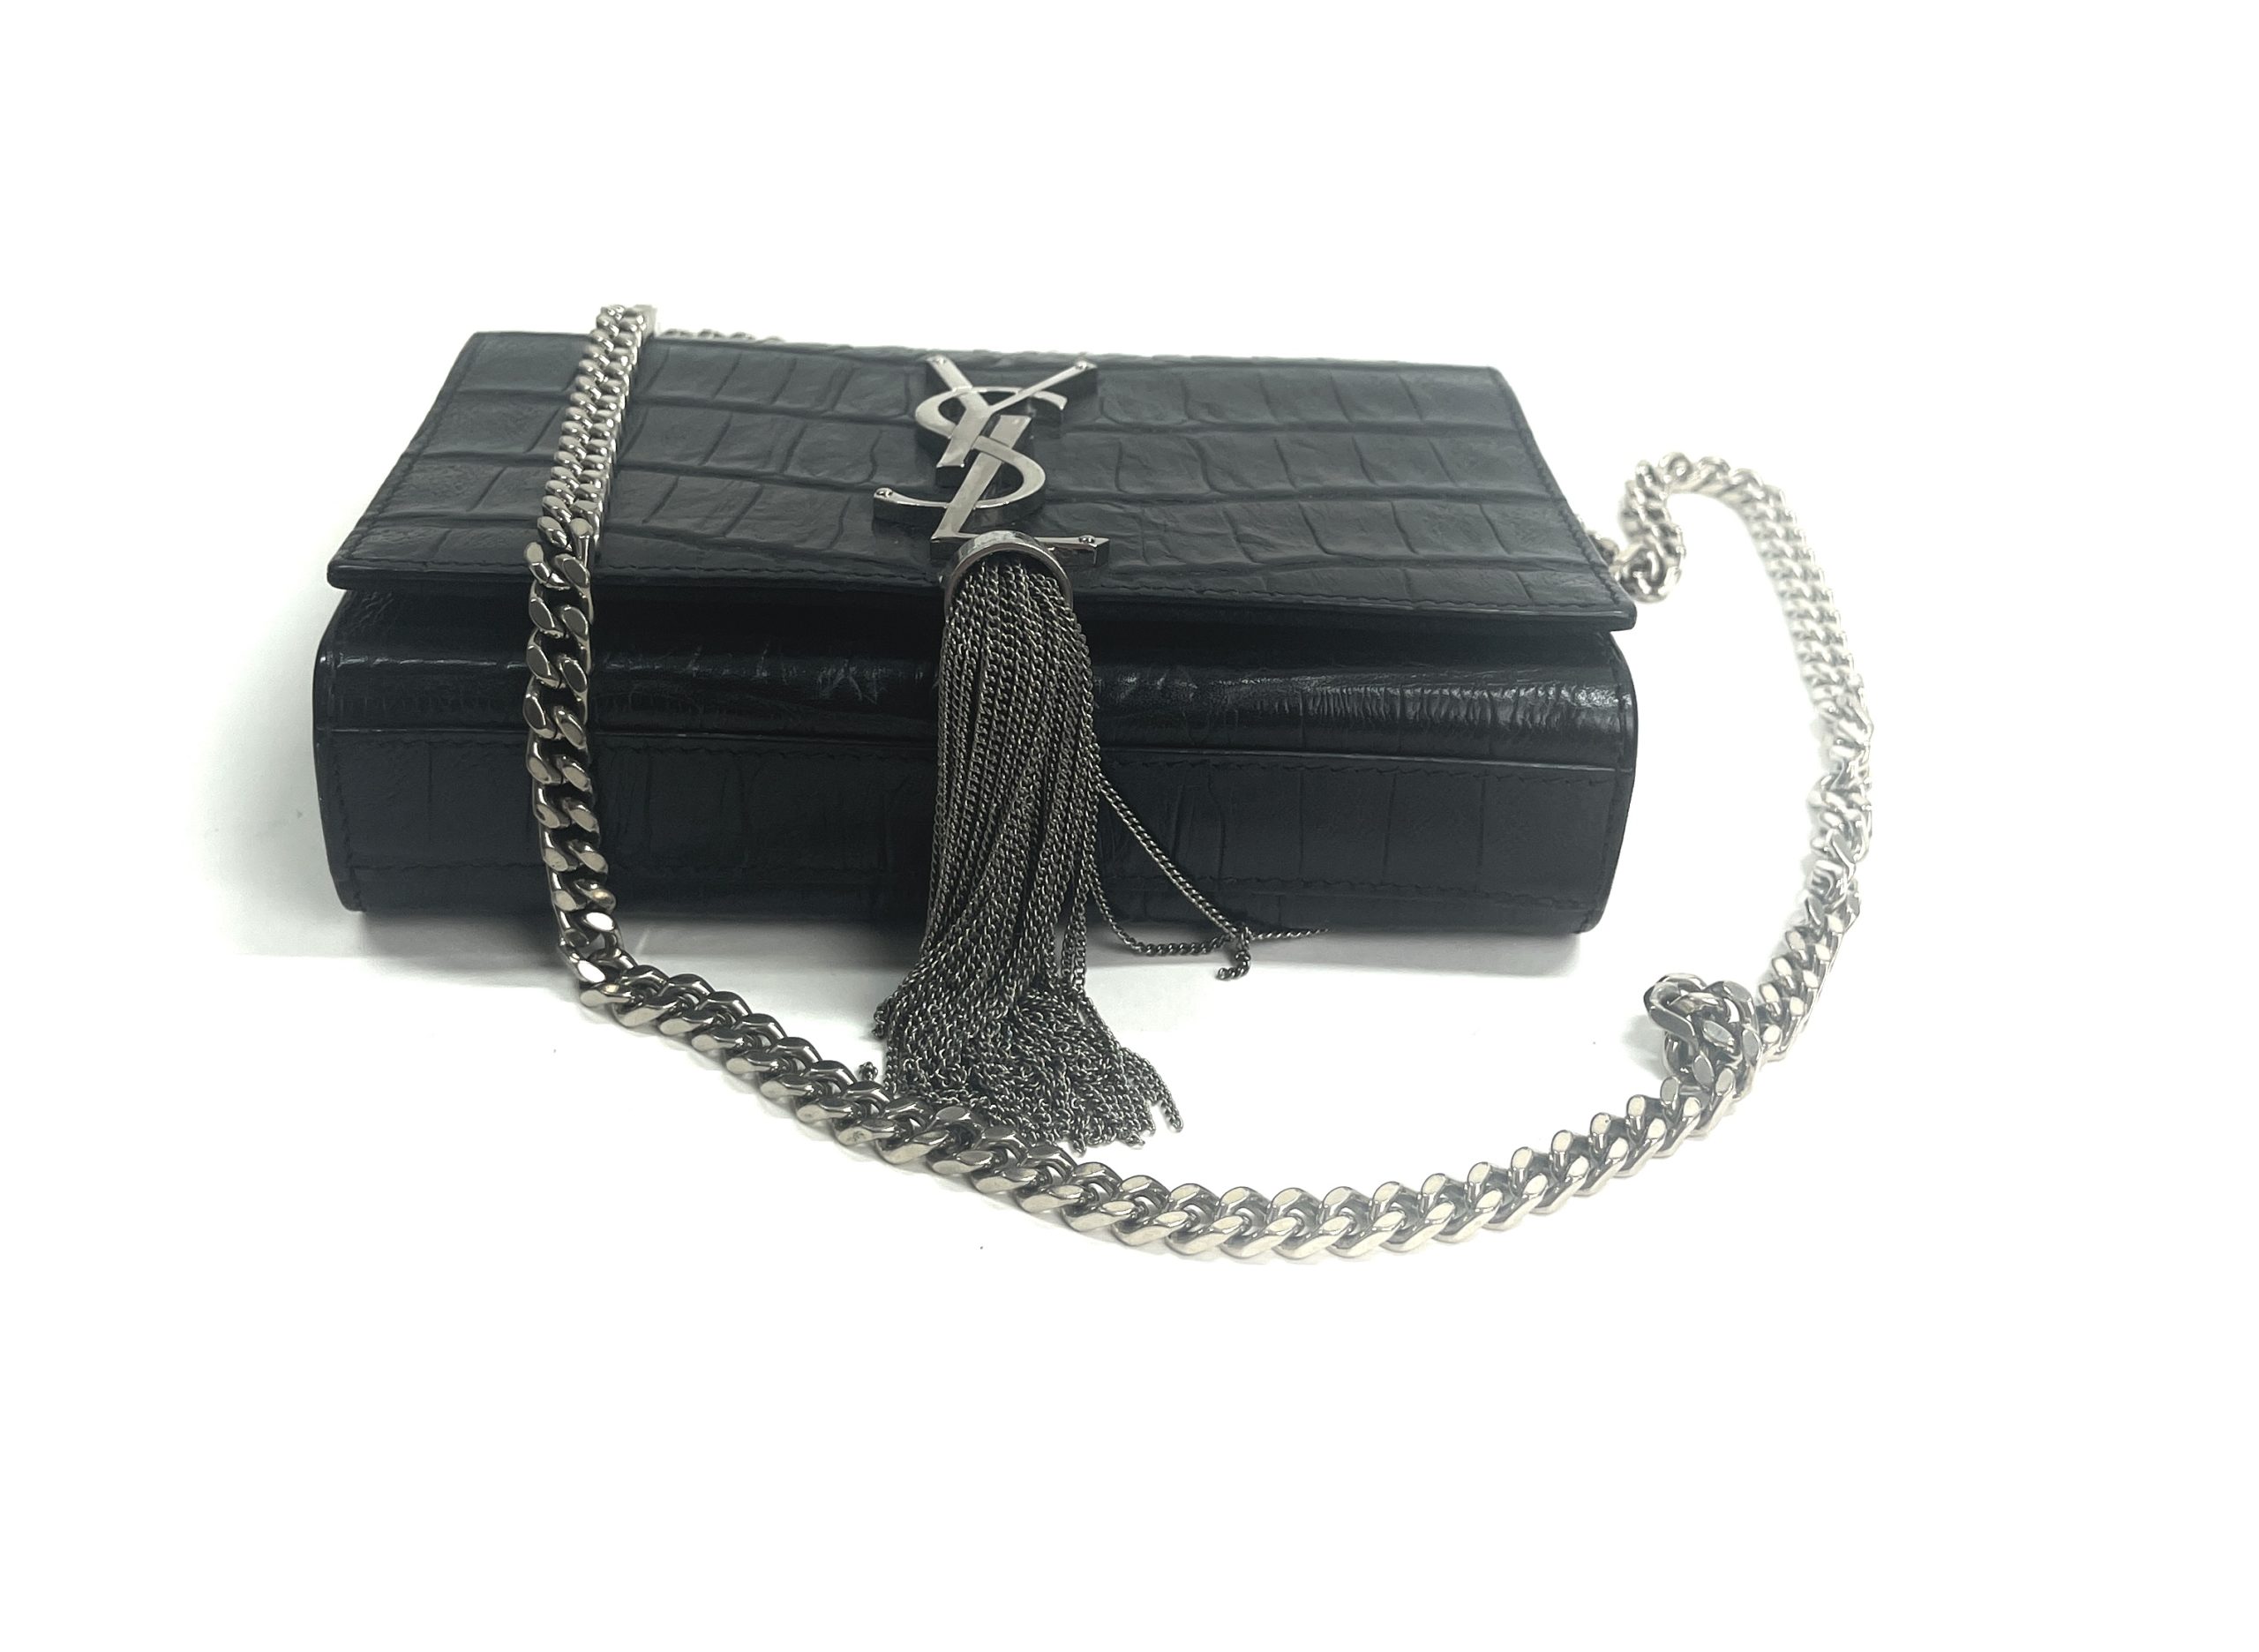 YSL Small Kate Monogram Bag - Black